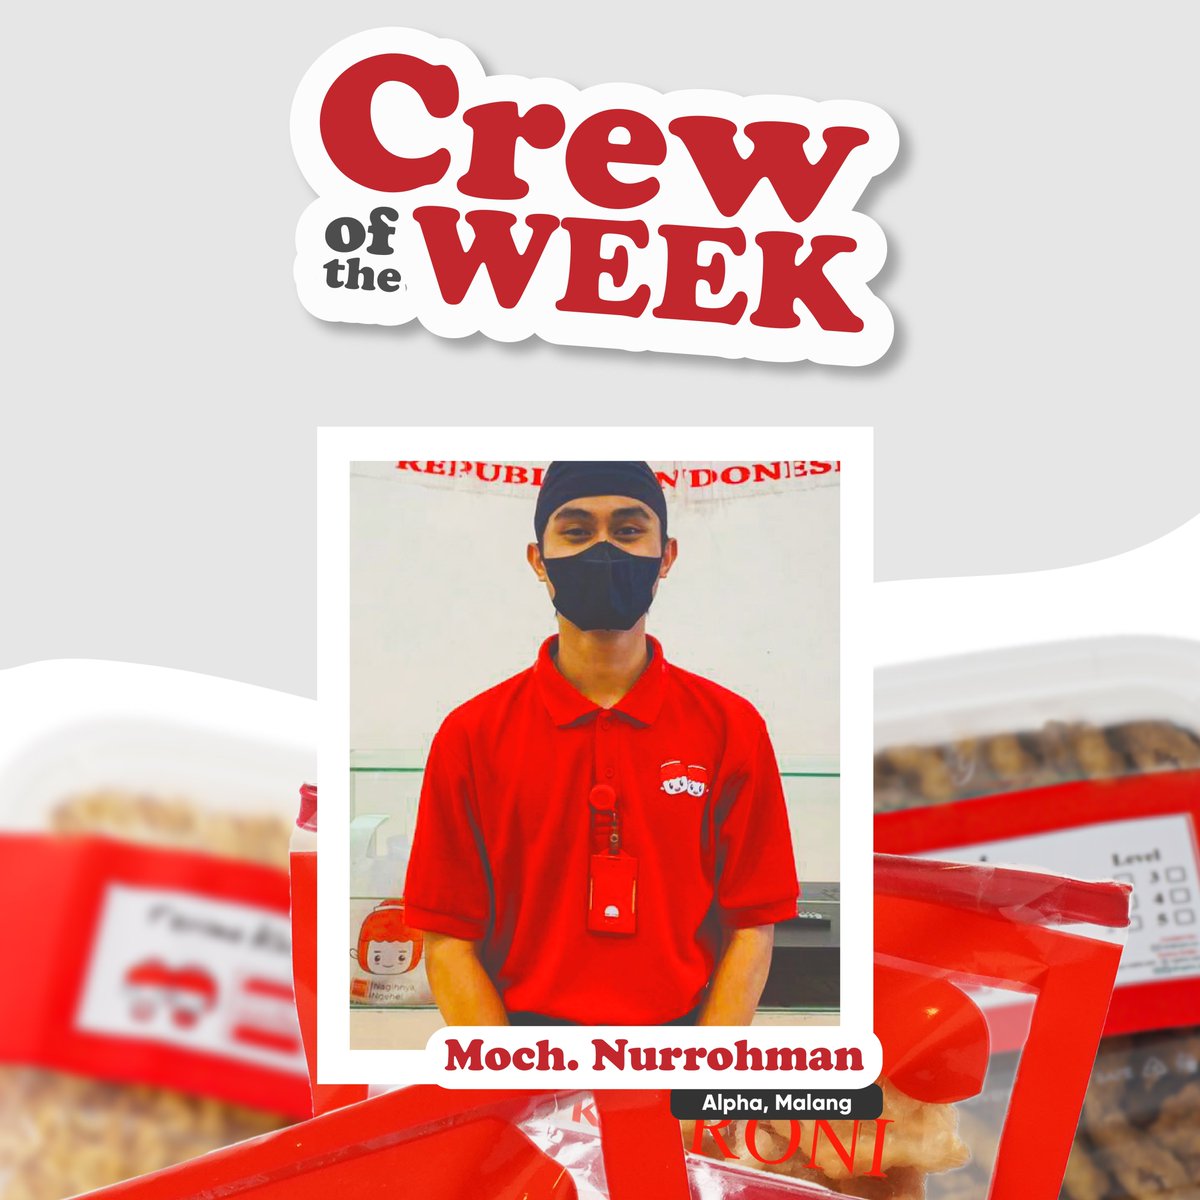 Setelah pekan lalu #crewoftheweek berasal dari Jakarta, minggu ini Minhe pilih crew yang berasal dari area Jawa Timur yoo Rek! ada Kak Moch. Nurrohman dari Outlet Alpha Malang ya #maheaddicts 😎

#makaroningehe
#cemilanindonesia #snackkhasindonesia
#cemilan
#ngehe #nagihnyangehe